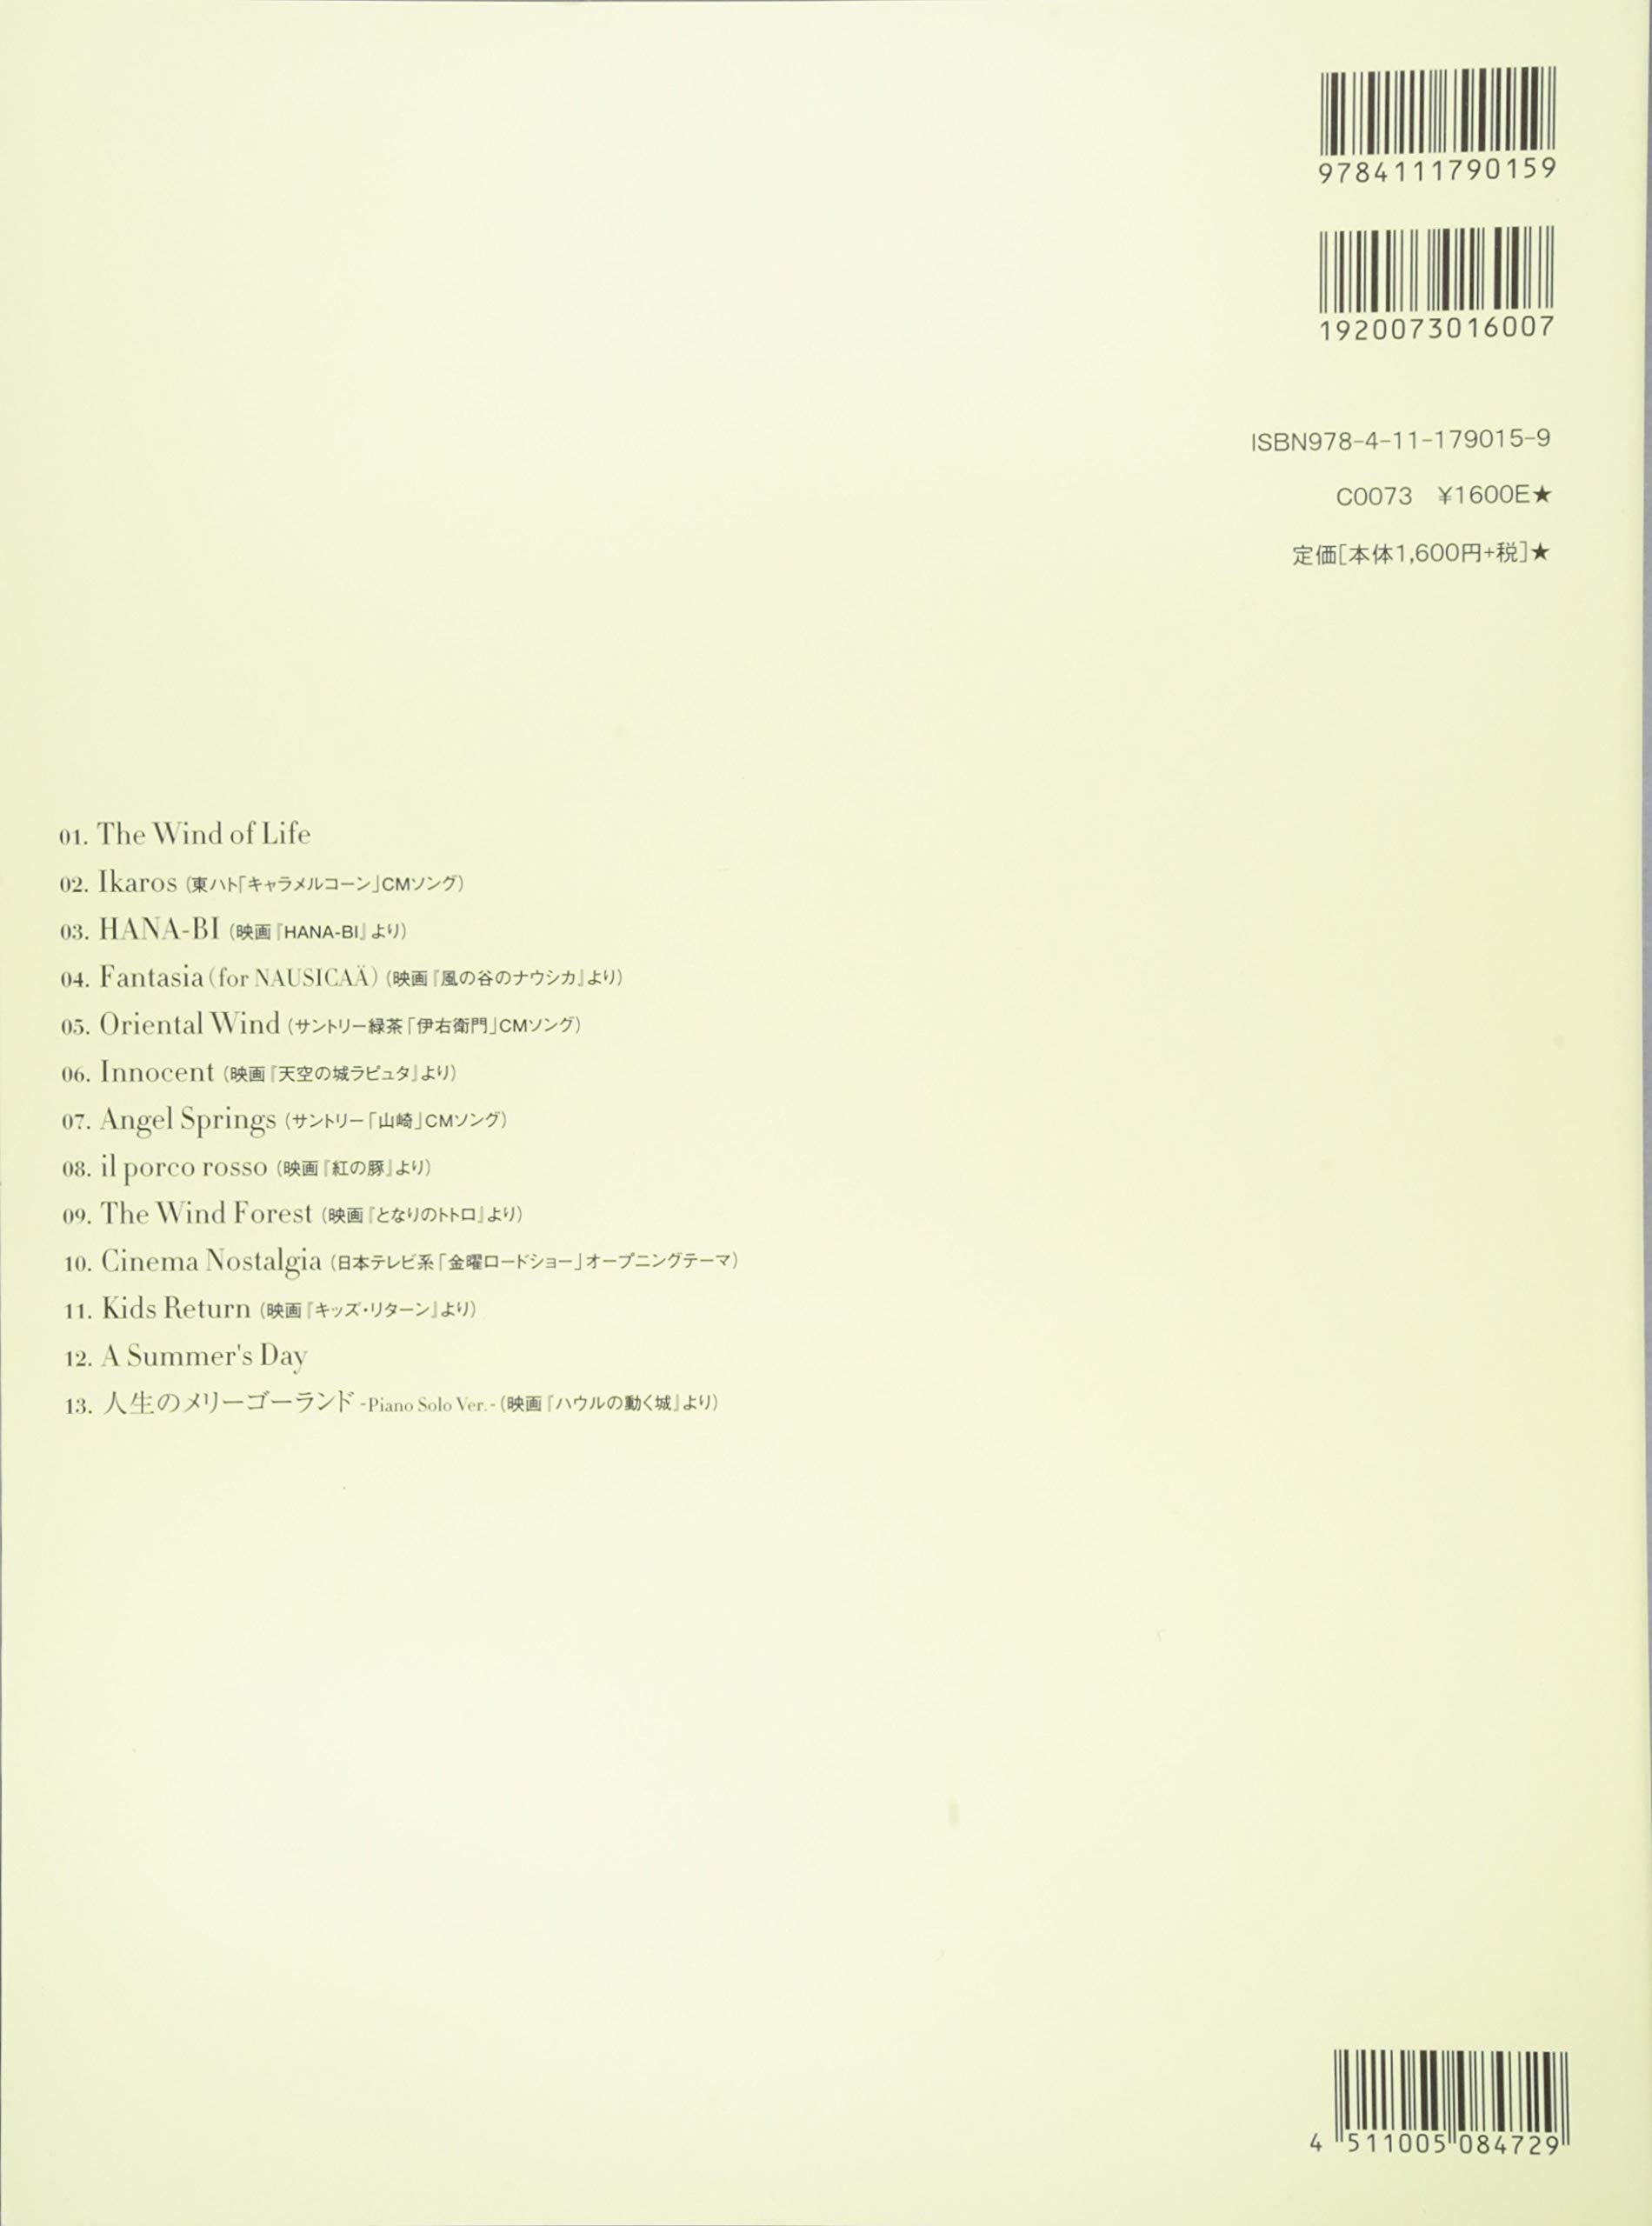 Piano Stories Best '88-'08 for Solo Piano - Joe Hisaishi